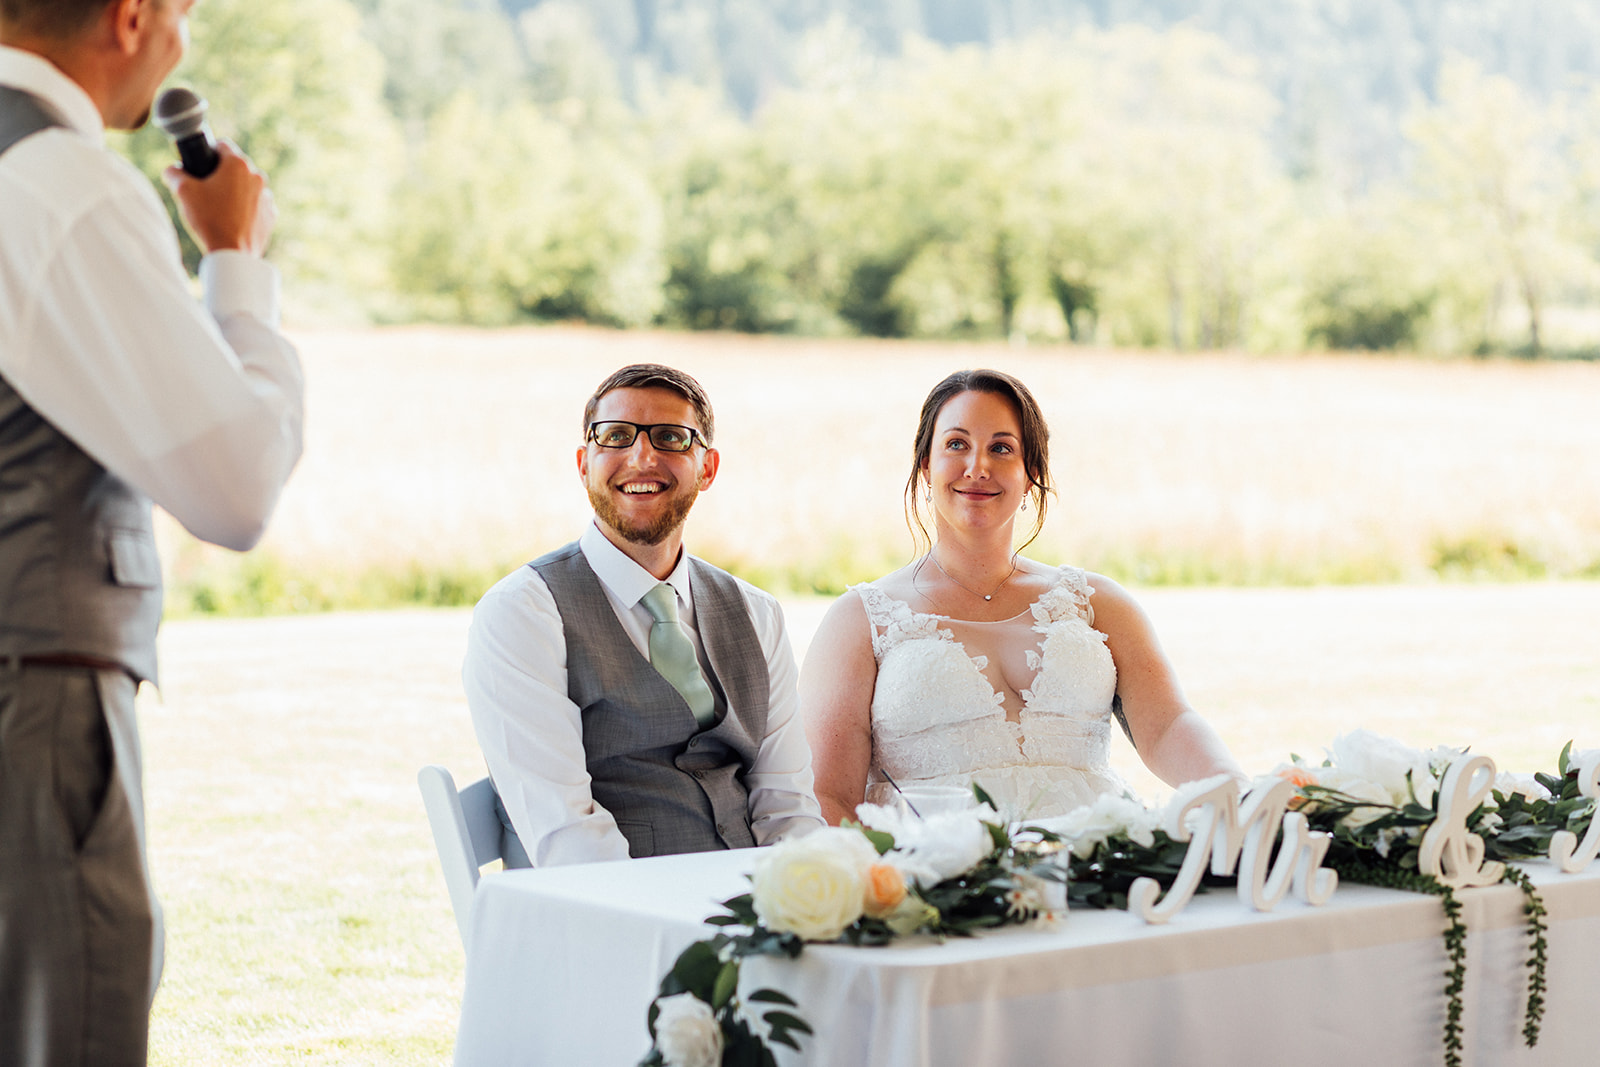 Mount Peak Farm Wedding